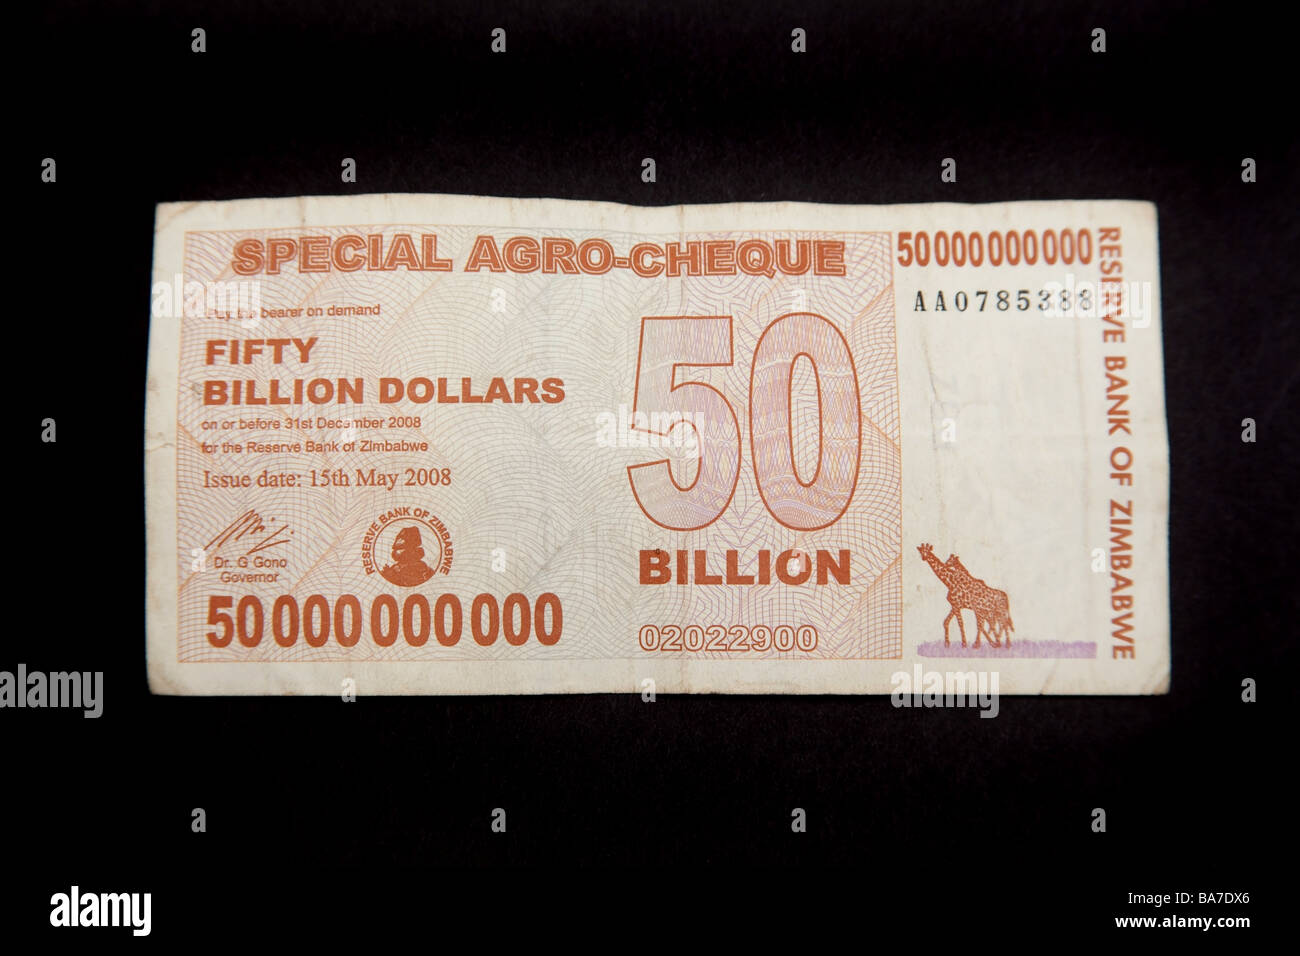 Zimbabwean 50 billion dollar note on a black studio background Stock Photo